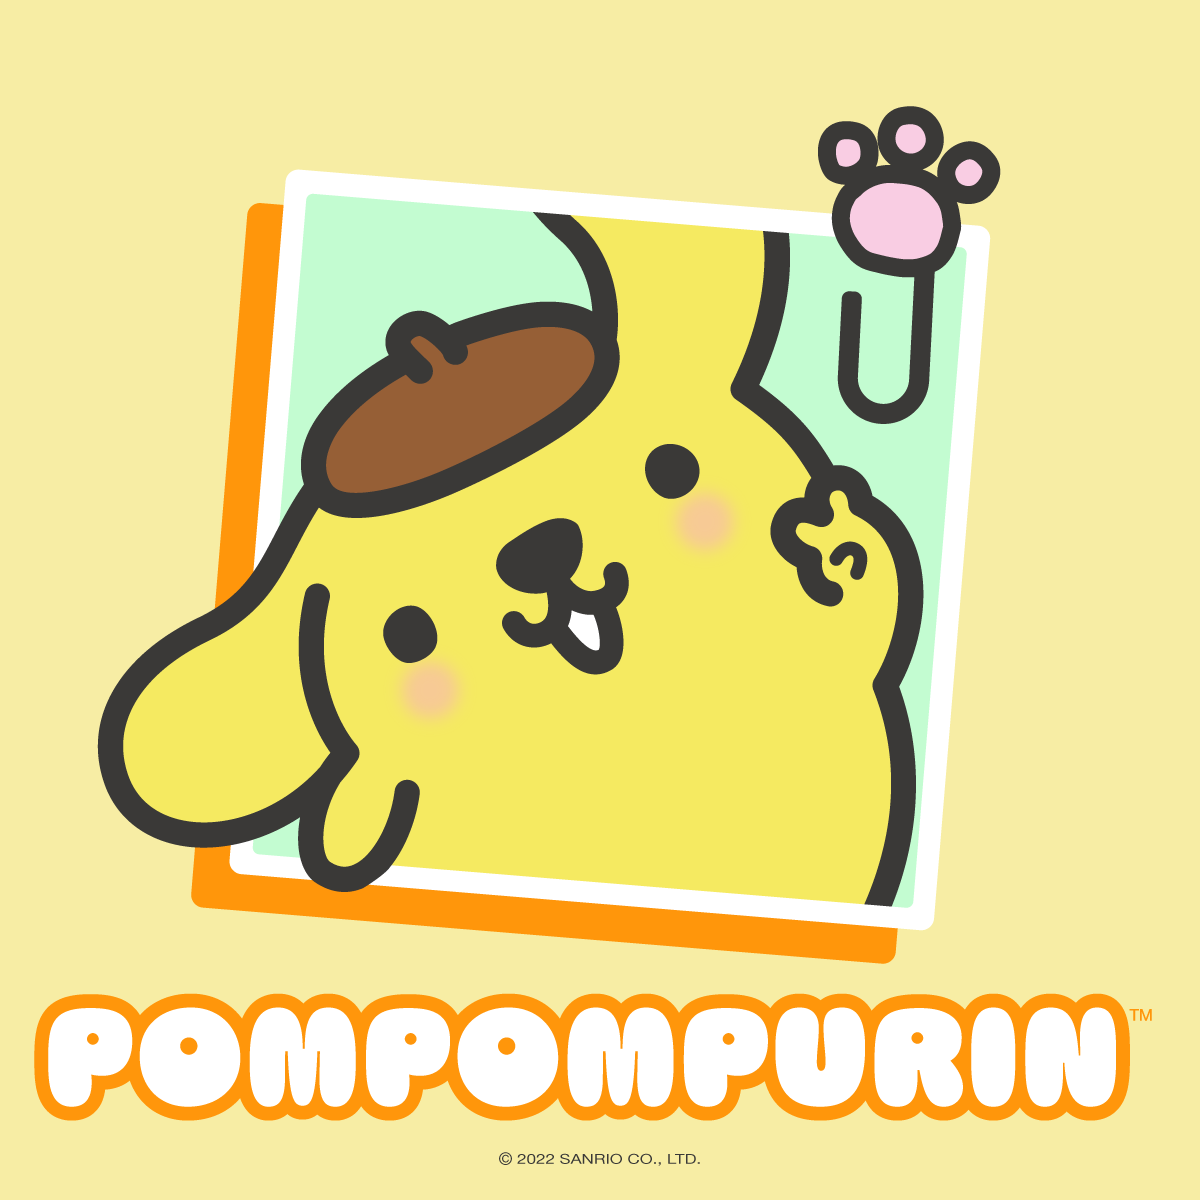 Sanrio Friend of the Month: Pompompurin